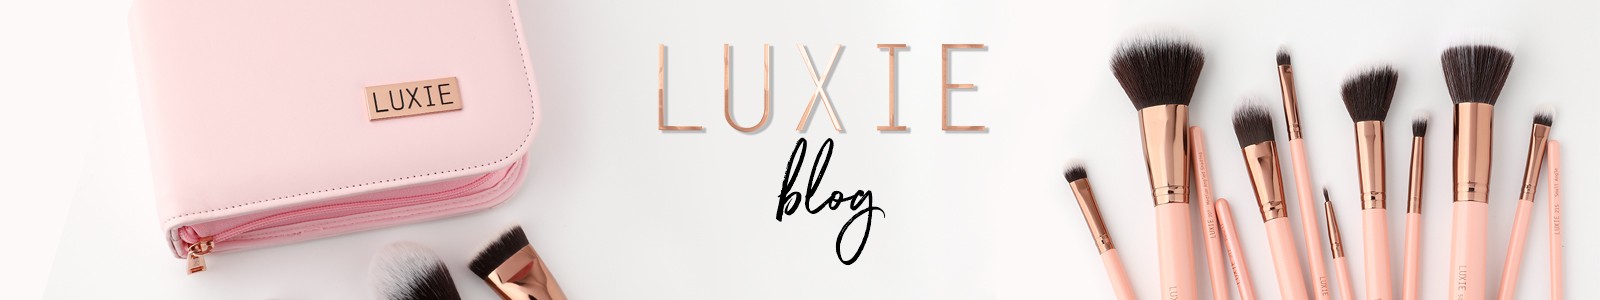 Luxie Blog